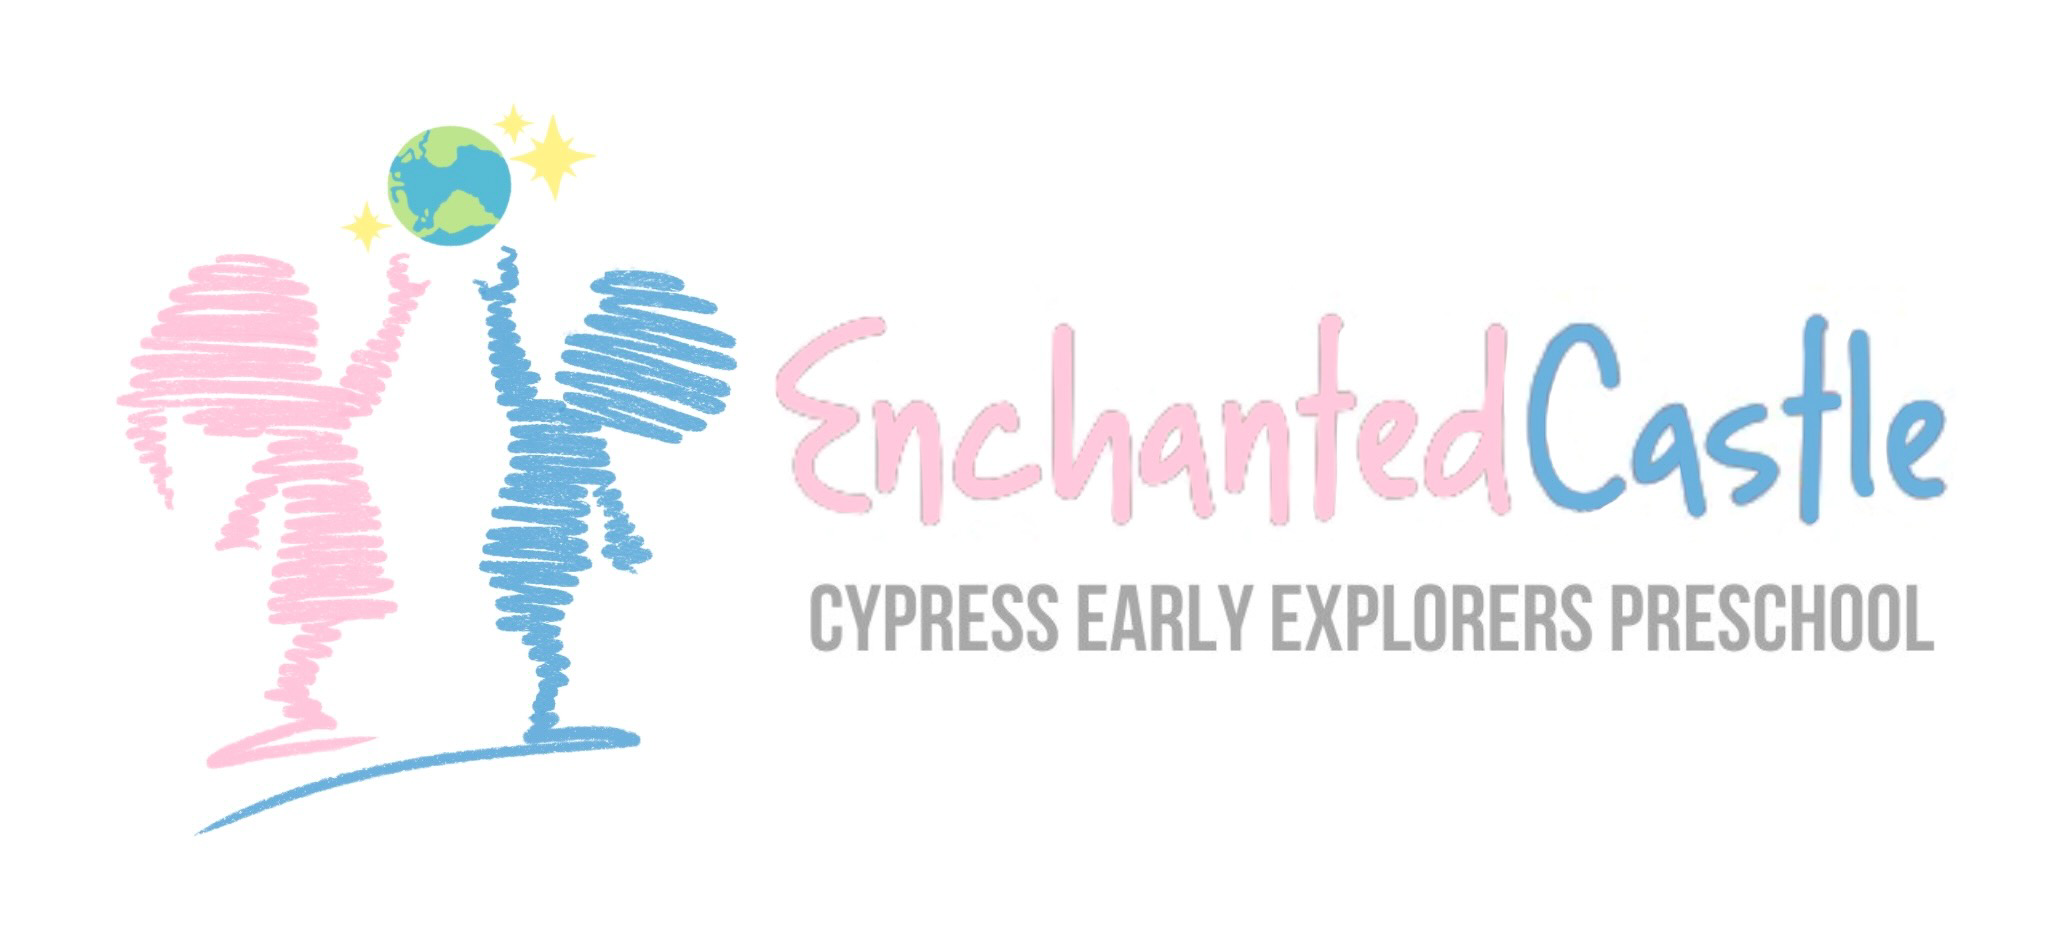 Cypress Early Explorers Preschool